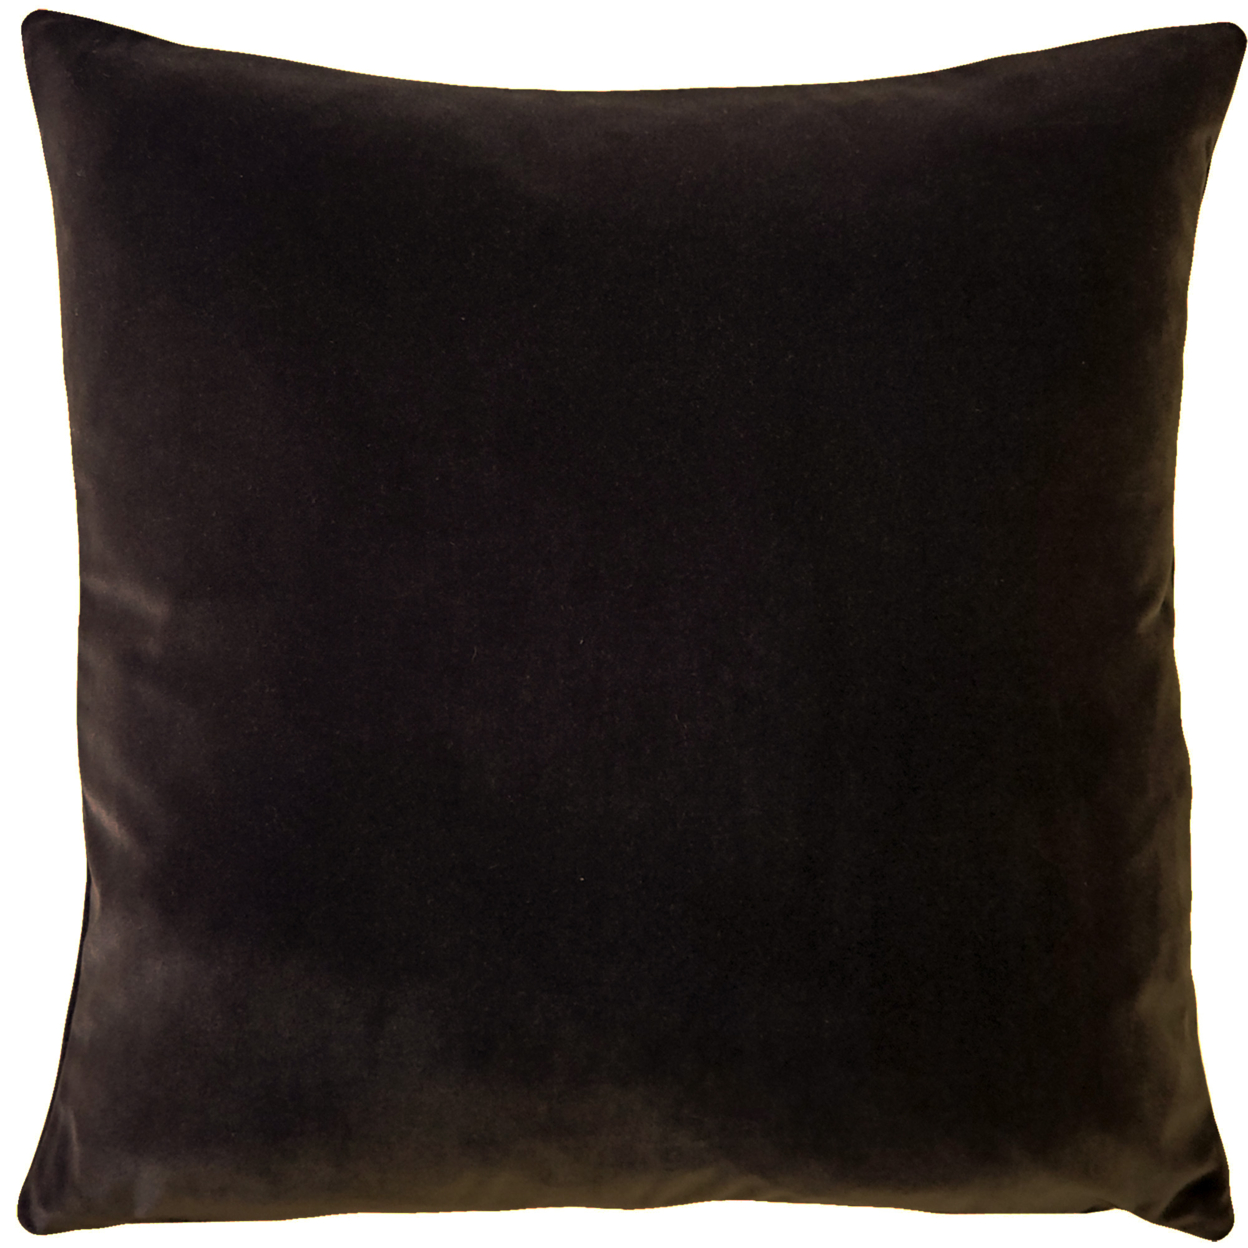 Castello Velvet Throw Pillows, Complete Pillow With Polyfill Pillow Insert (18 Colors, 3 Sizes) - Sedona Orange, 20x20